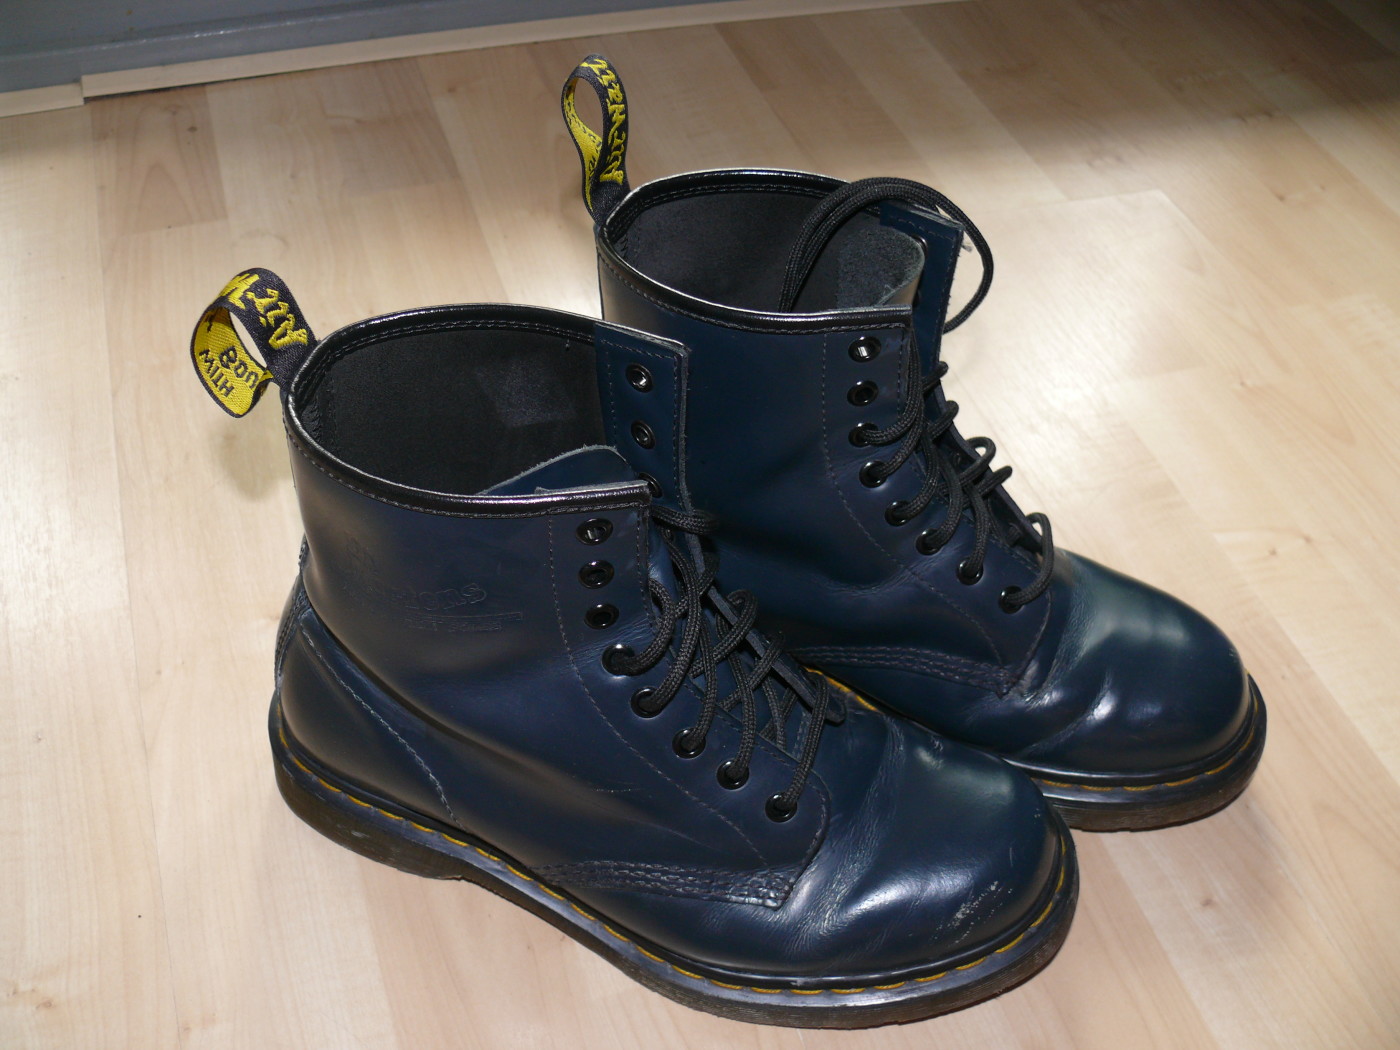 90s fashion boots